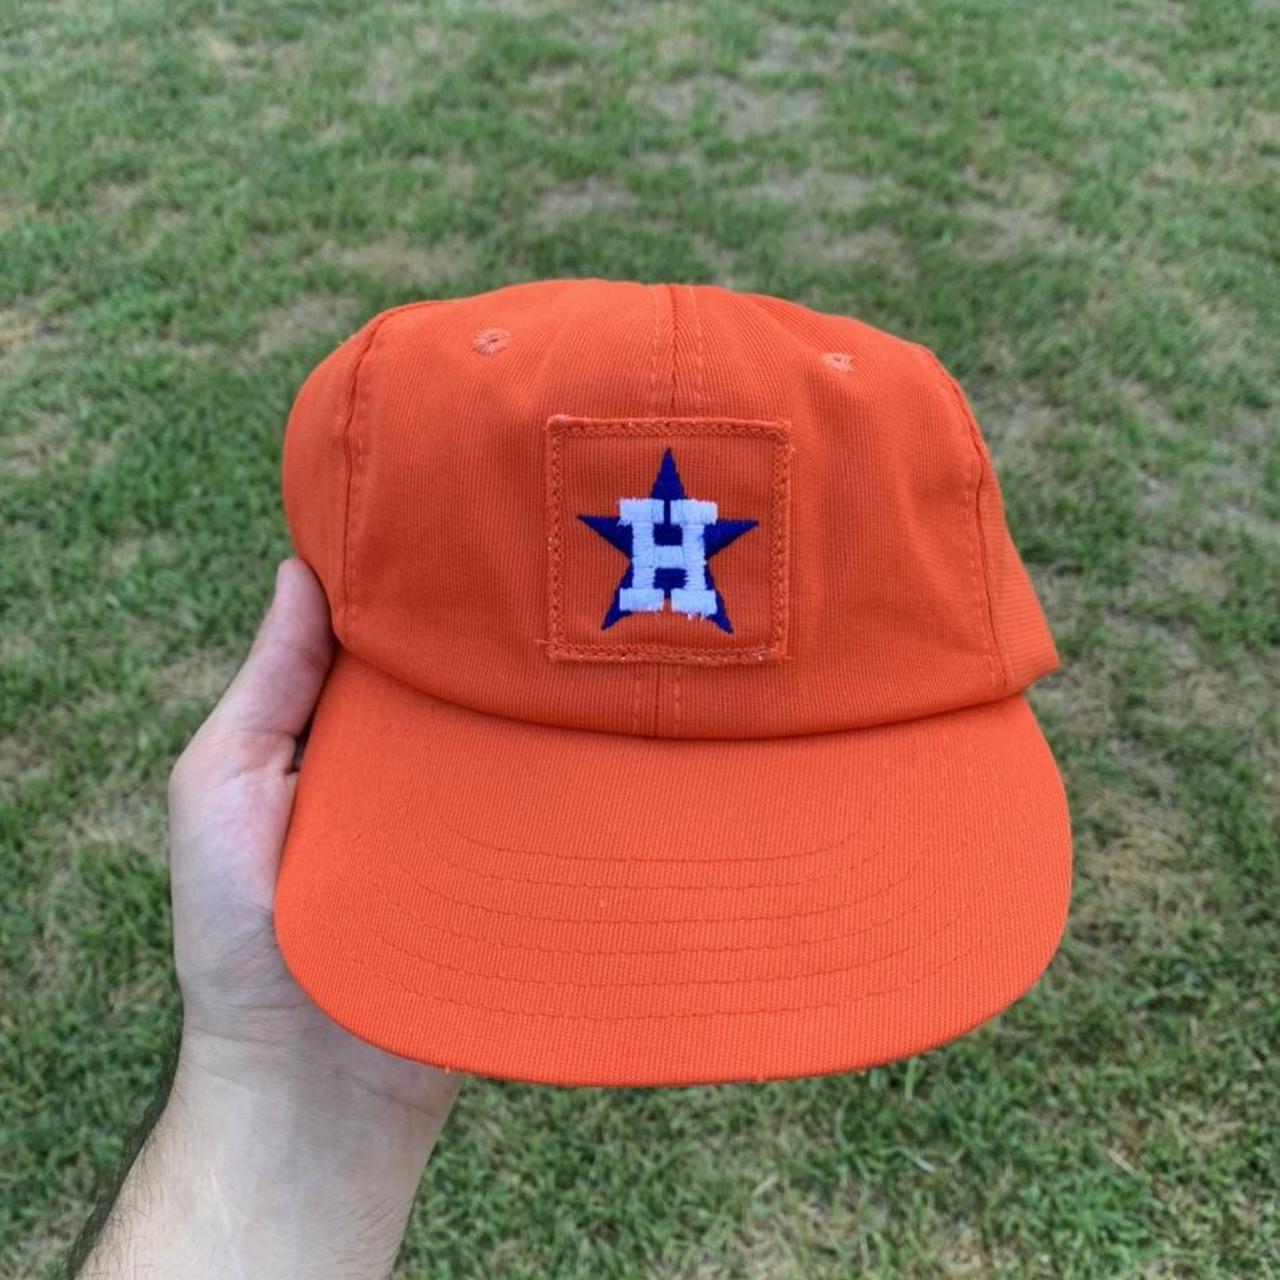 Houston Astros Shirt Youth Medium #houstonastros - Depop